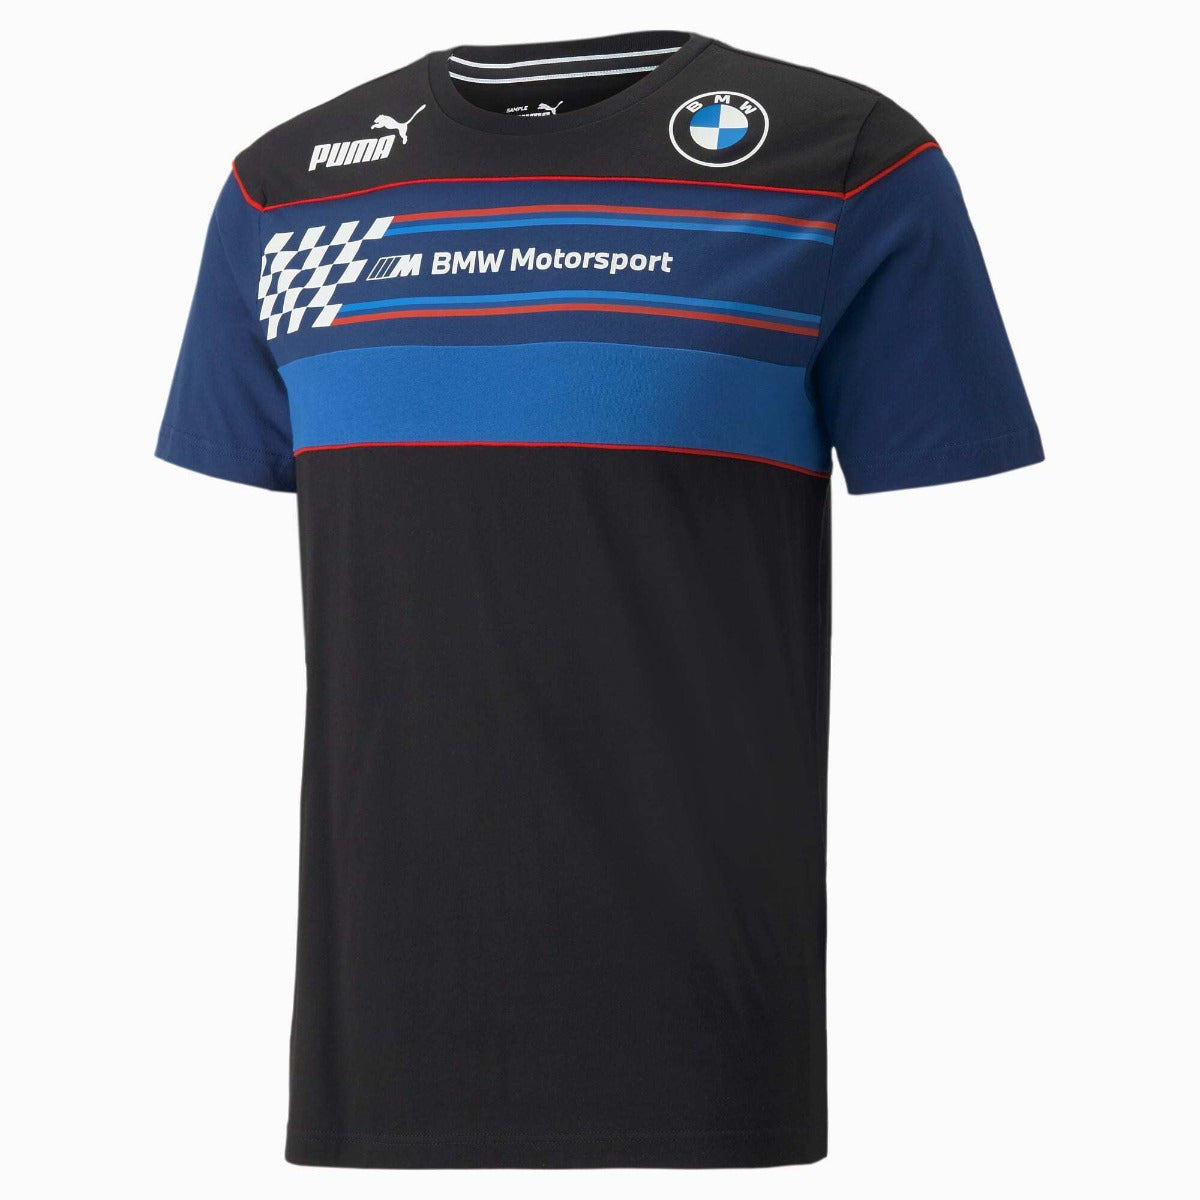 Puma BMW Motorsport SDS T-Shirt - Black/Blue